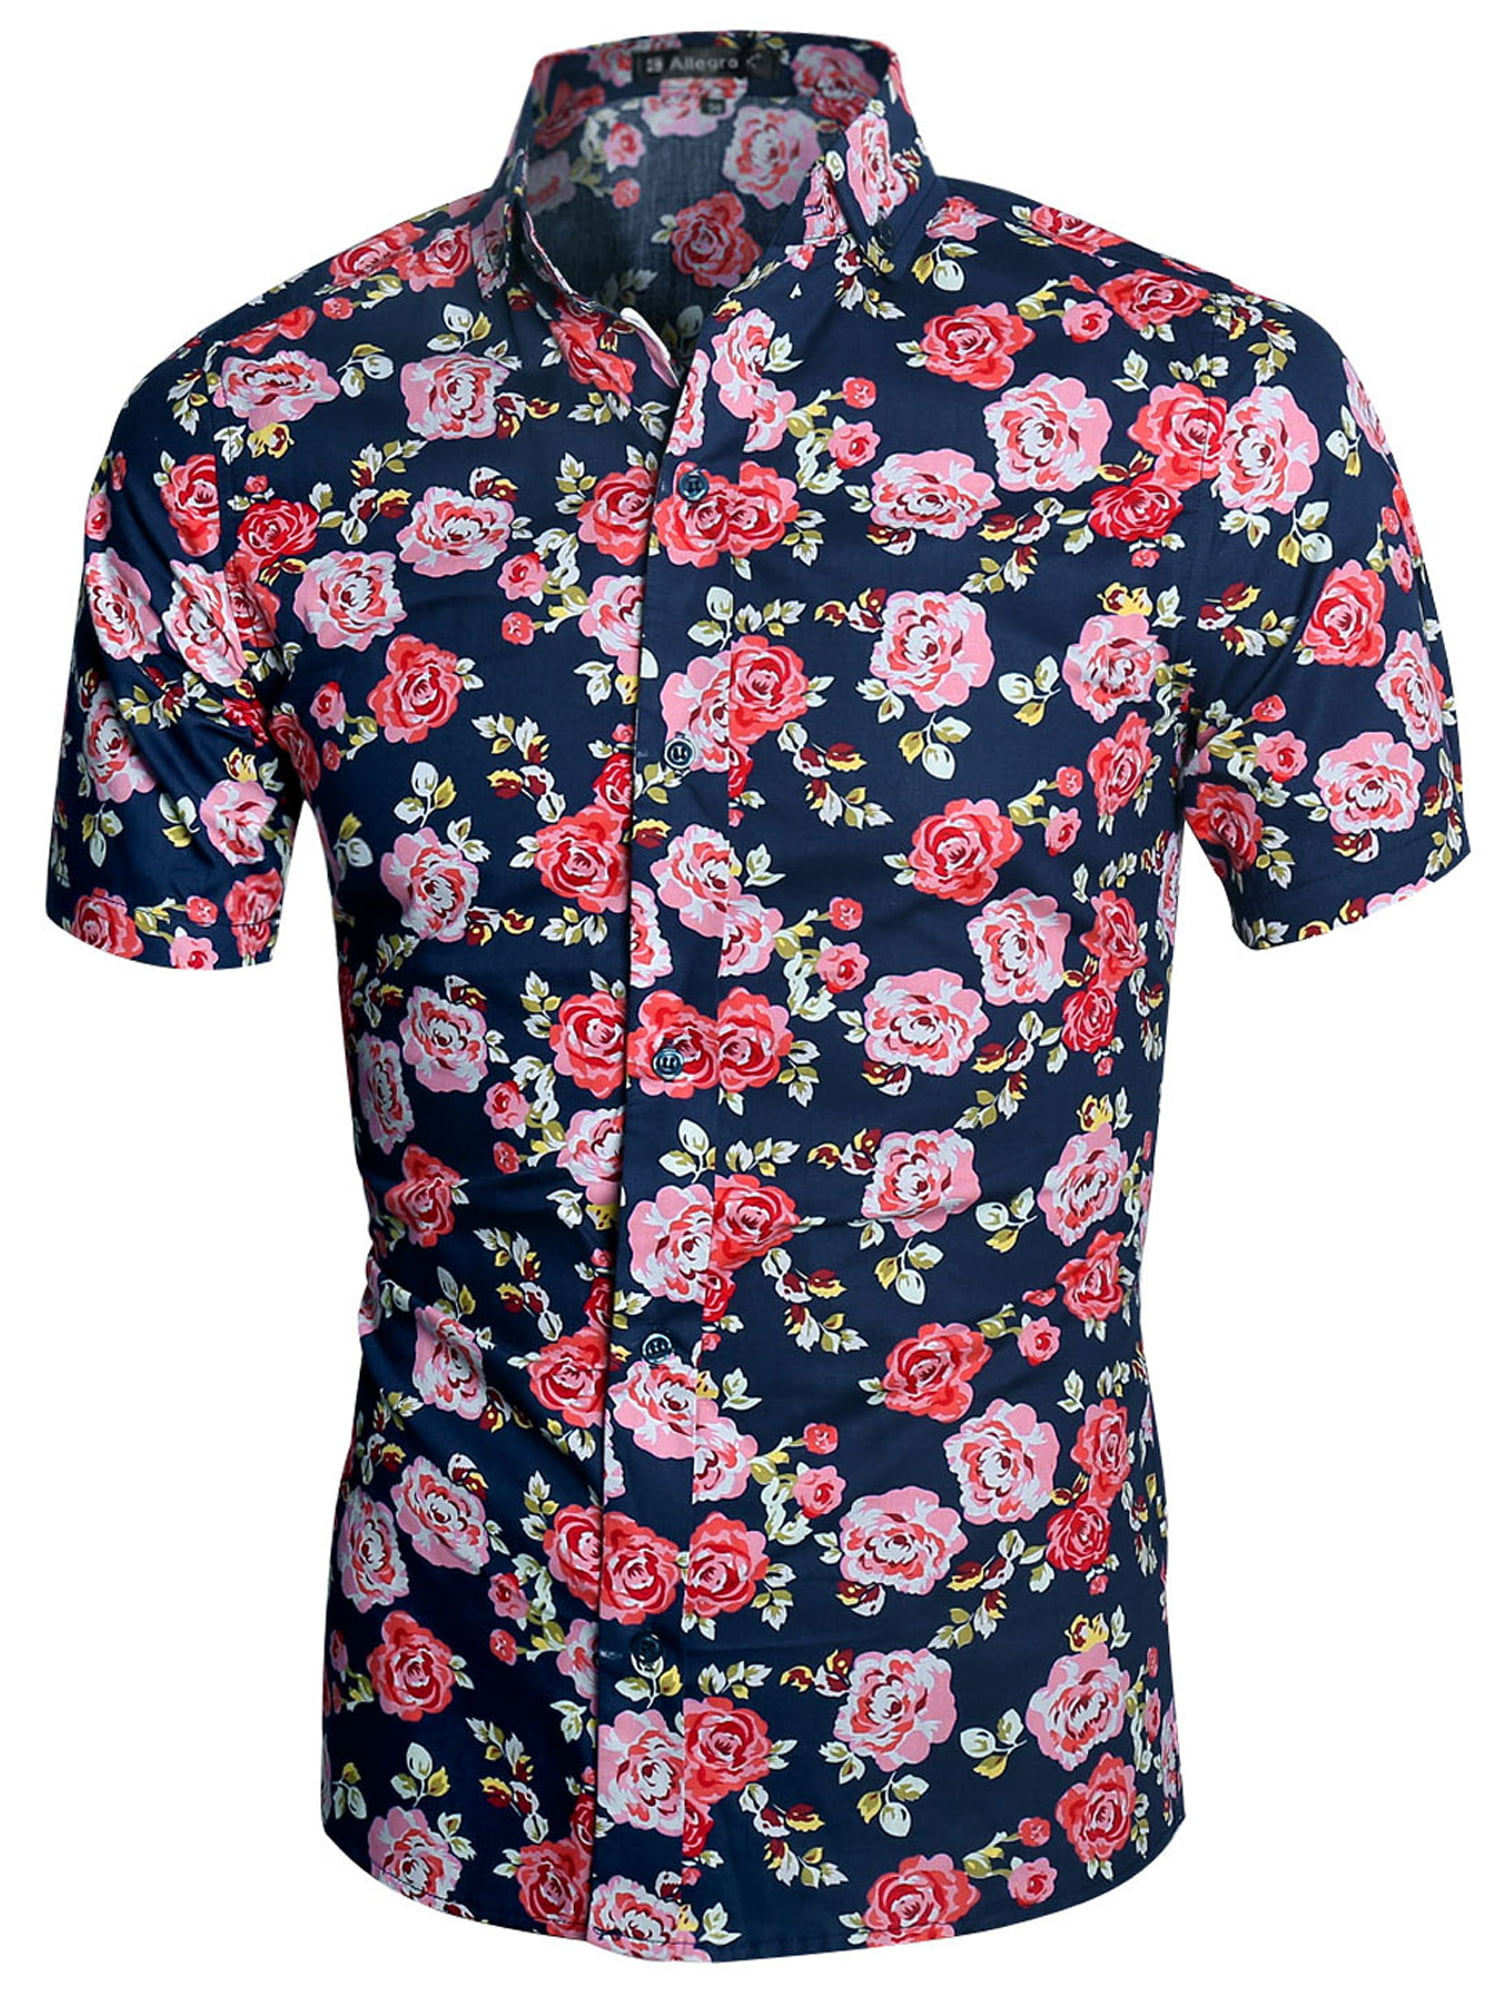 Lars Amadeus Men's Shirts Short Sleeve Floral Print Point Collar ...